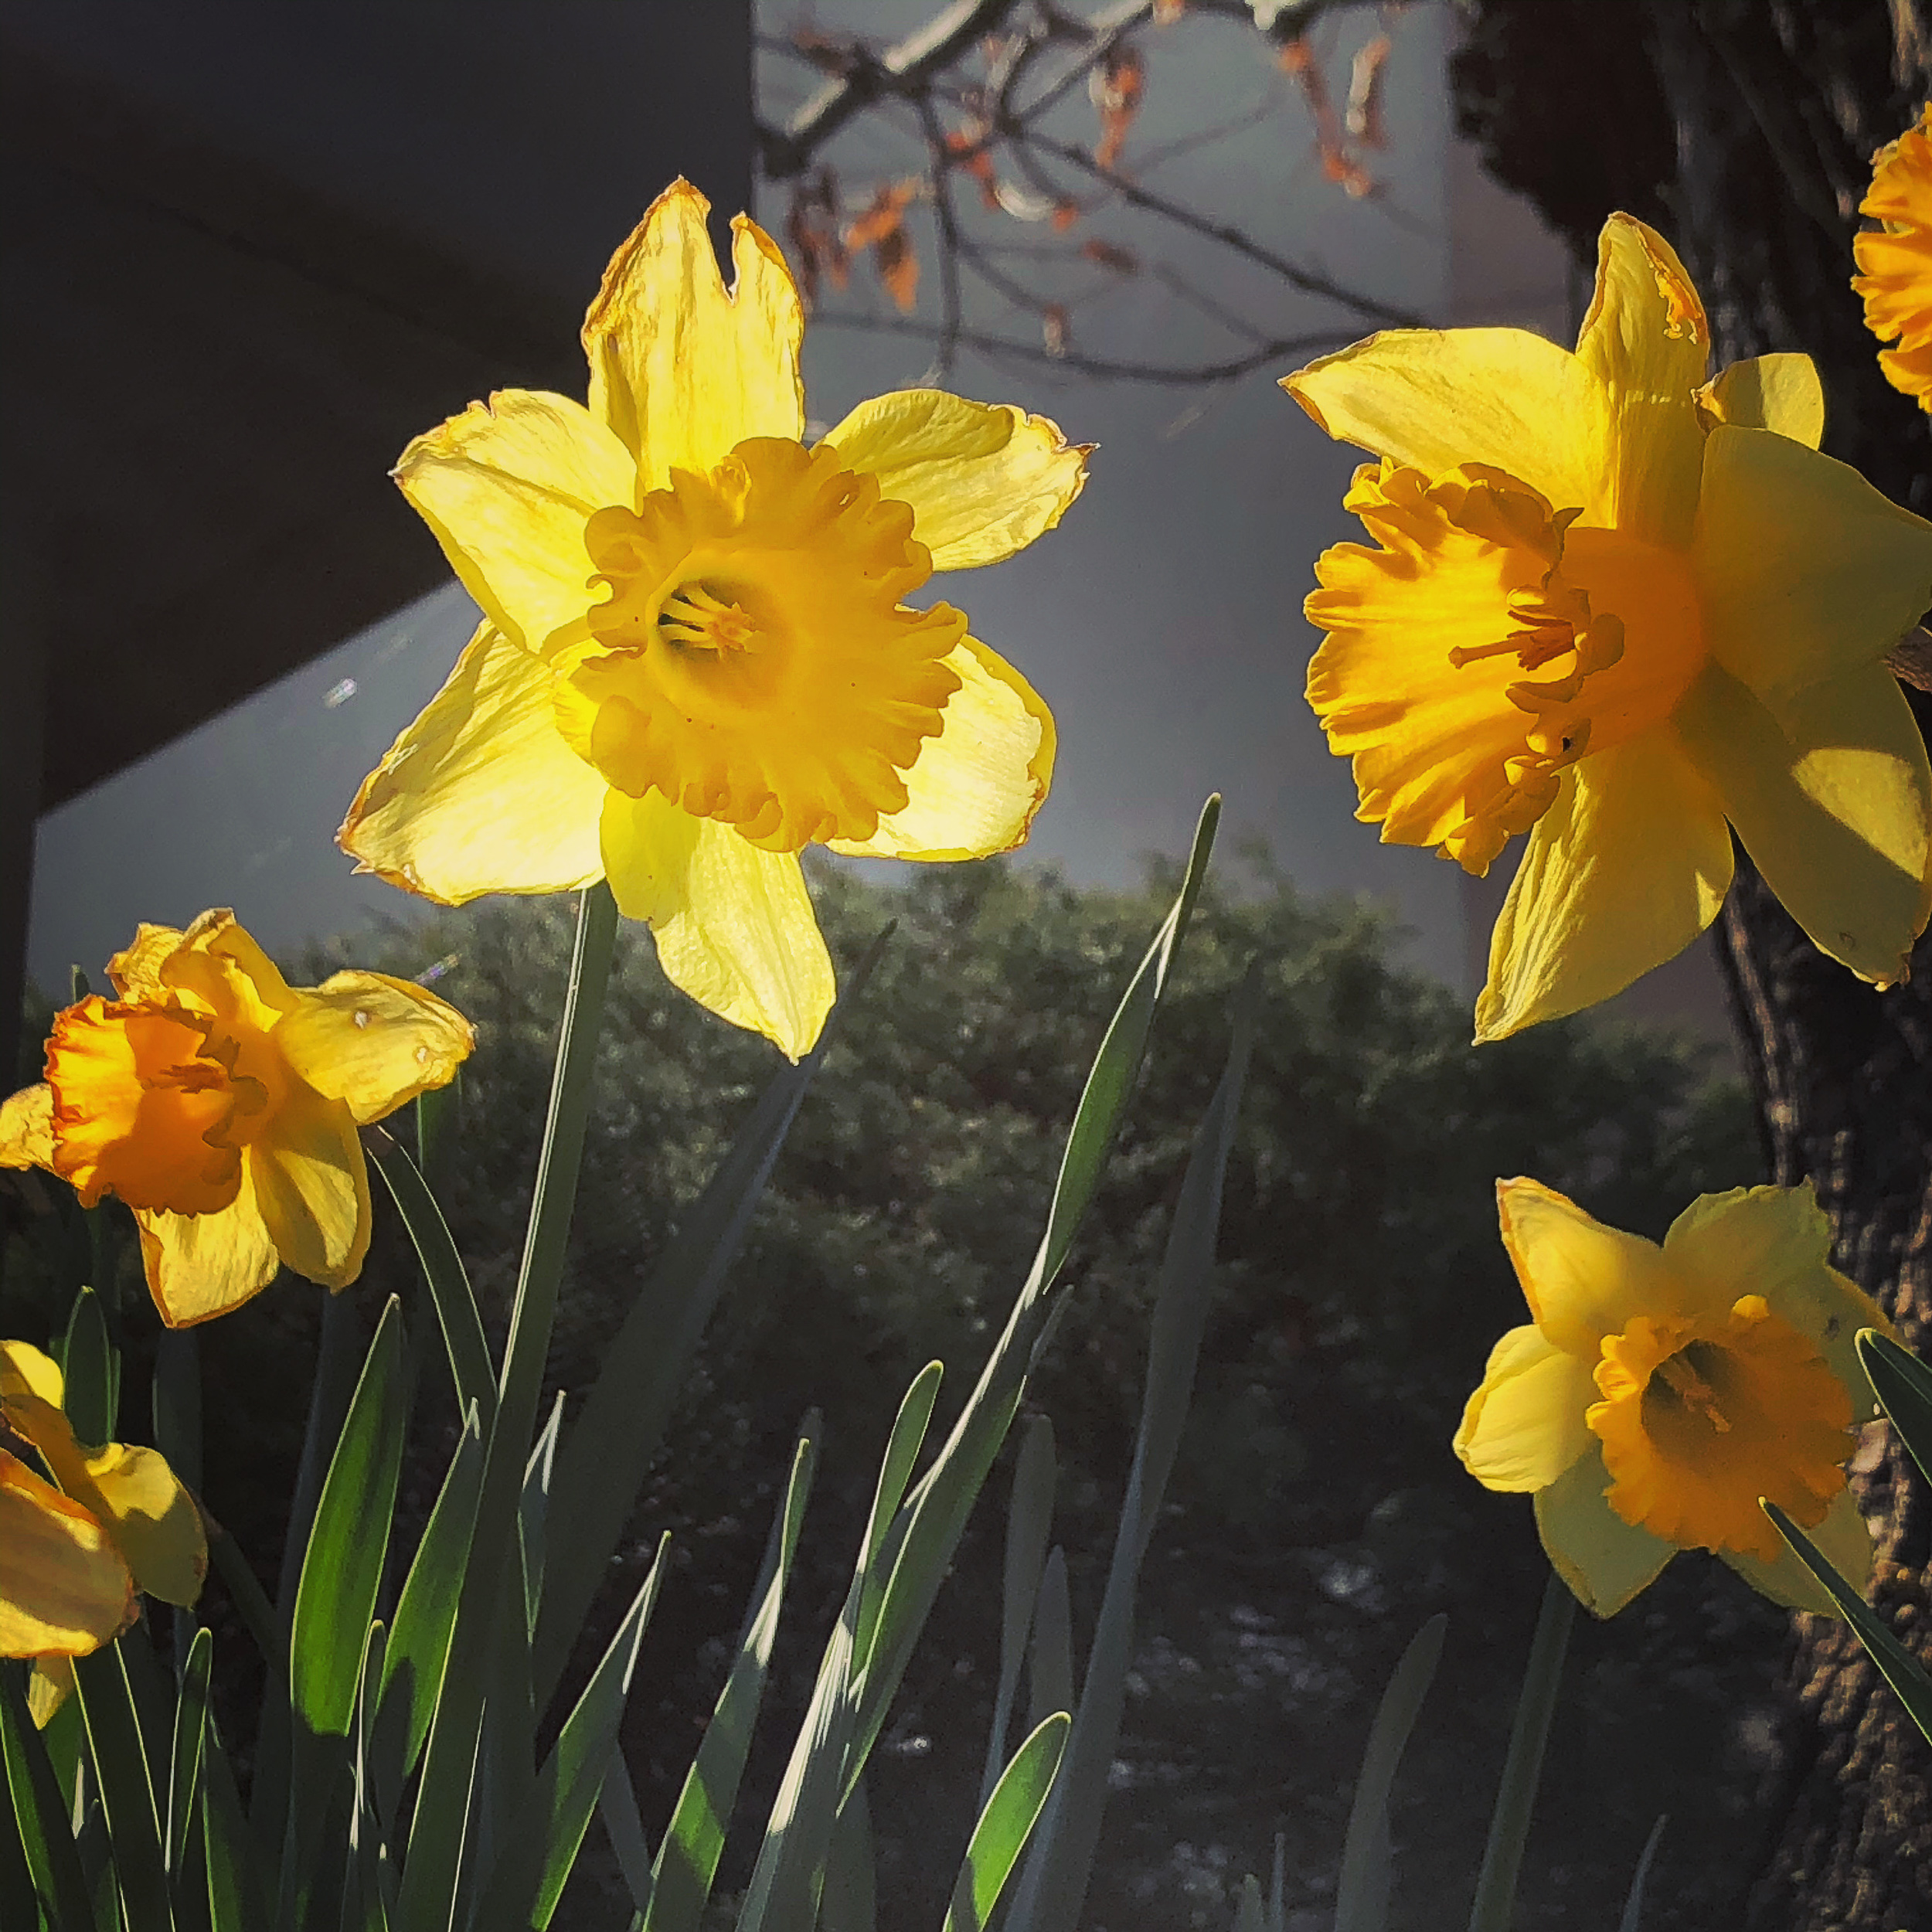 Radiant daffodils